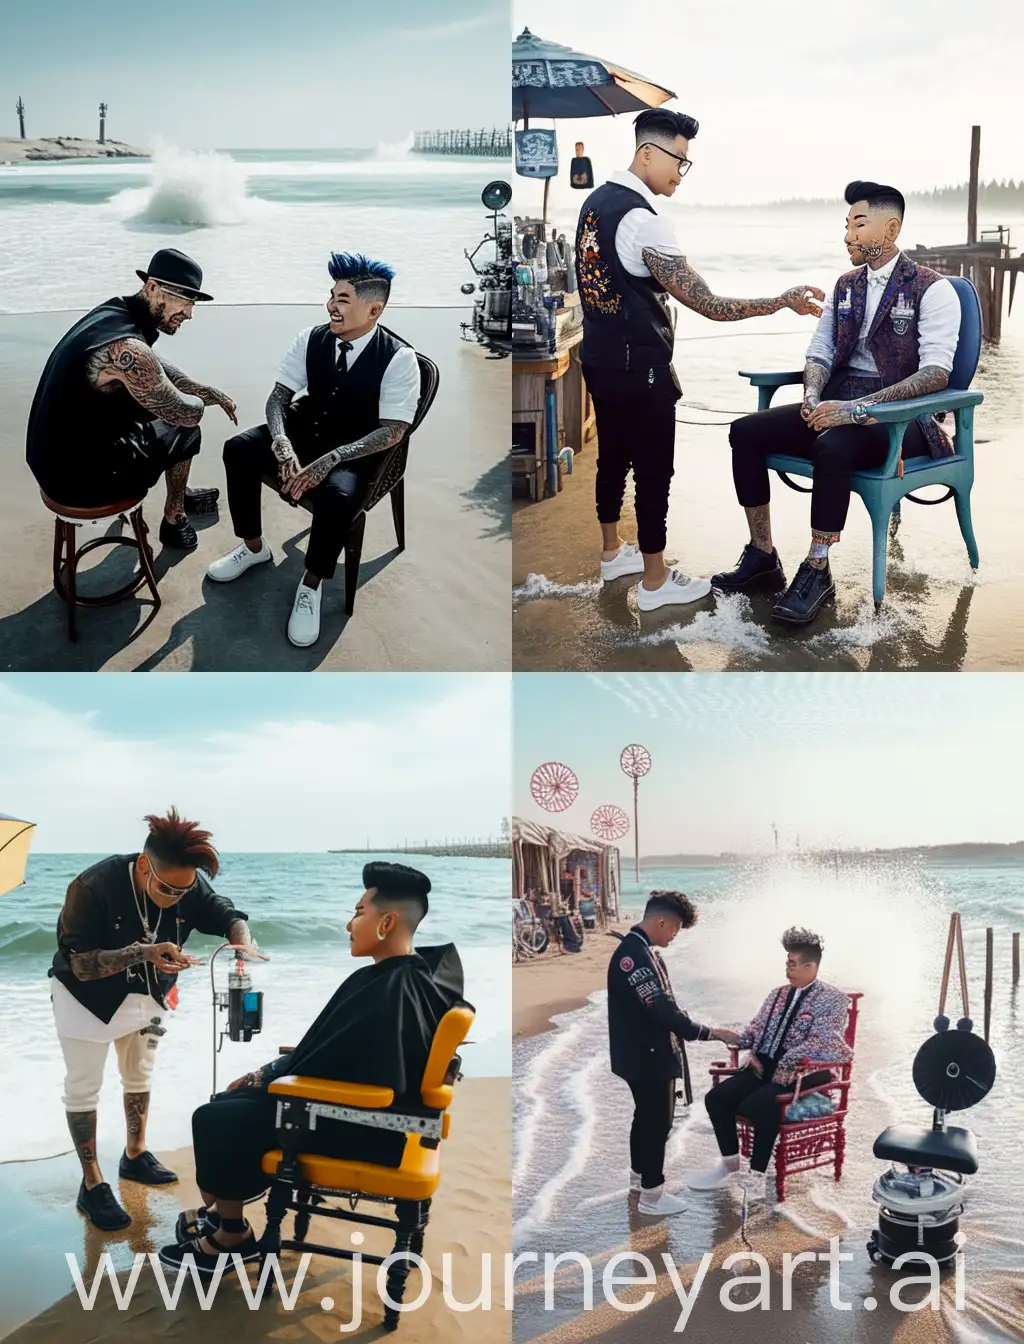 2 pria korea, sedang duduk di kursi barber premium, berjabat tangan, bertatto, di pinggir pantai tergenang, kamera sony, memegang clipper, dreamcacher 8K, 18mm lens, leica kamera